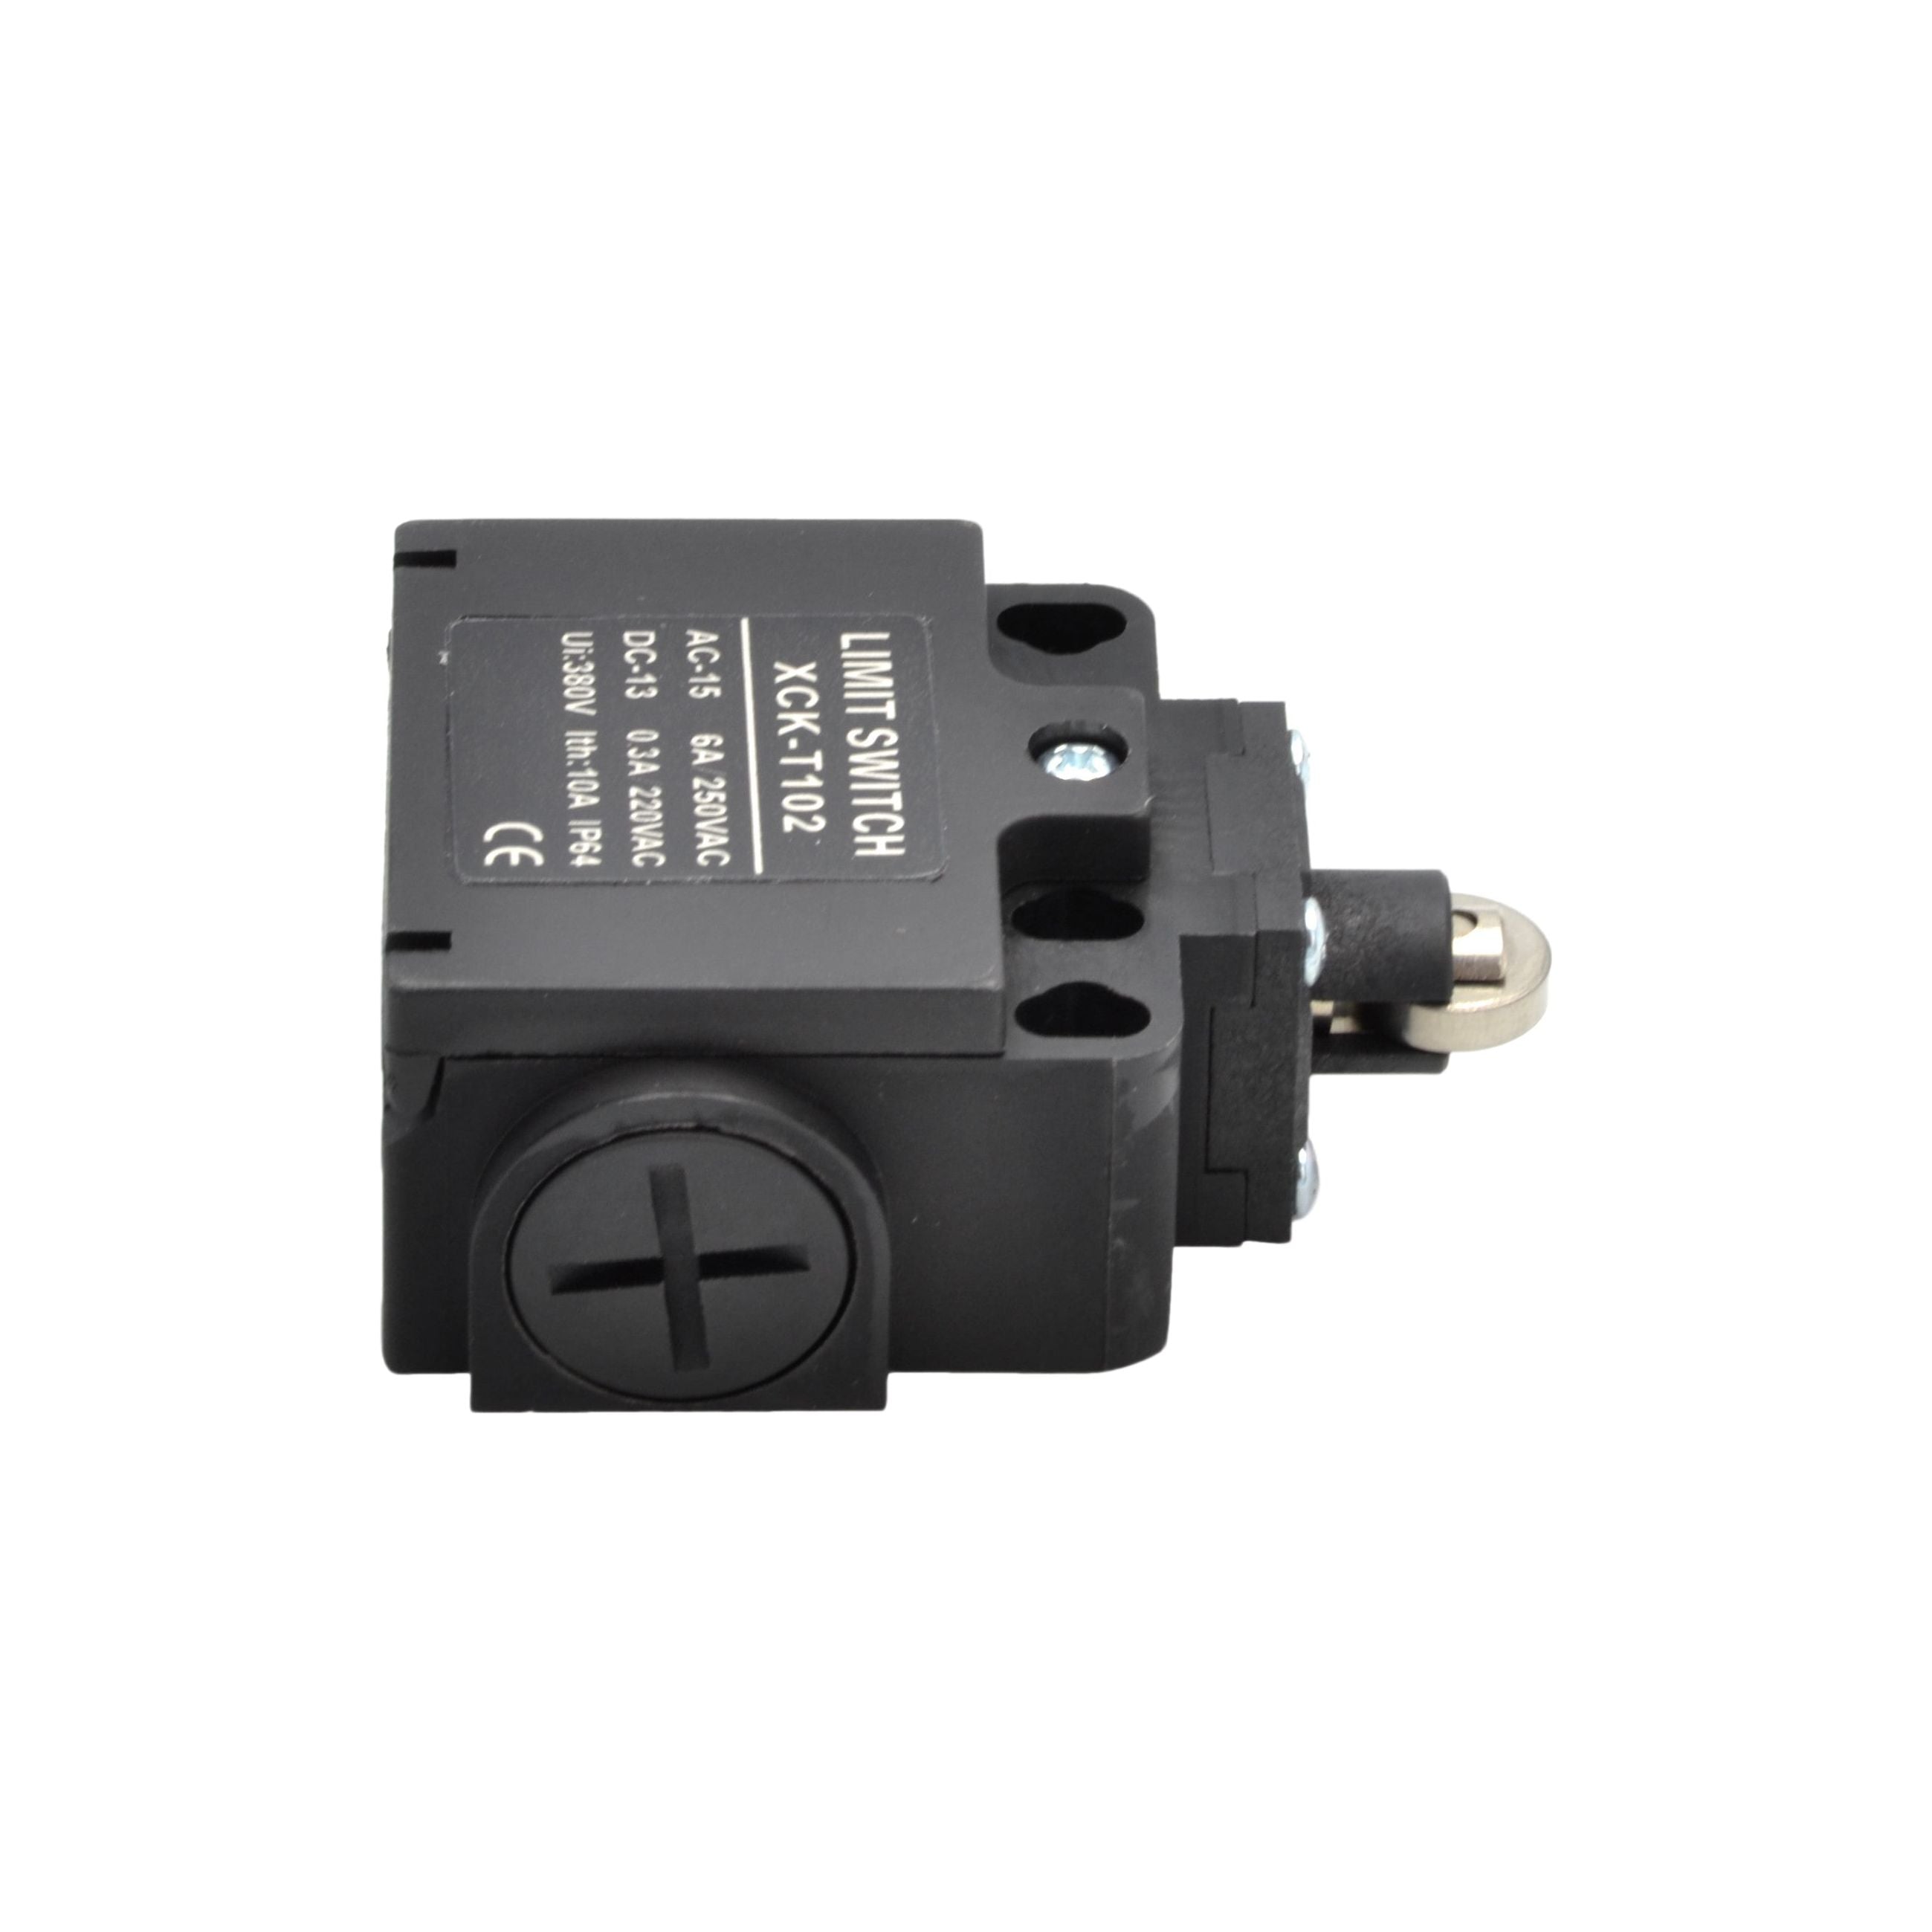 XCK-T102 Plunger Actuator Limit Switch